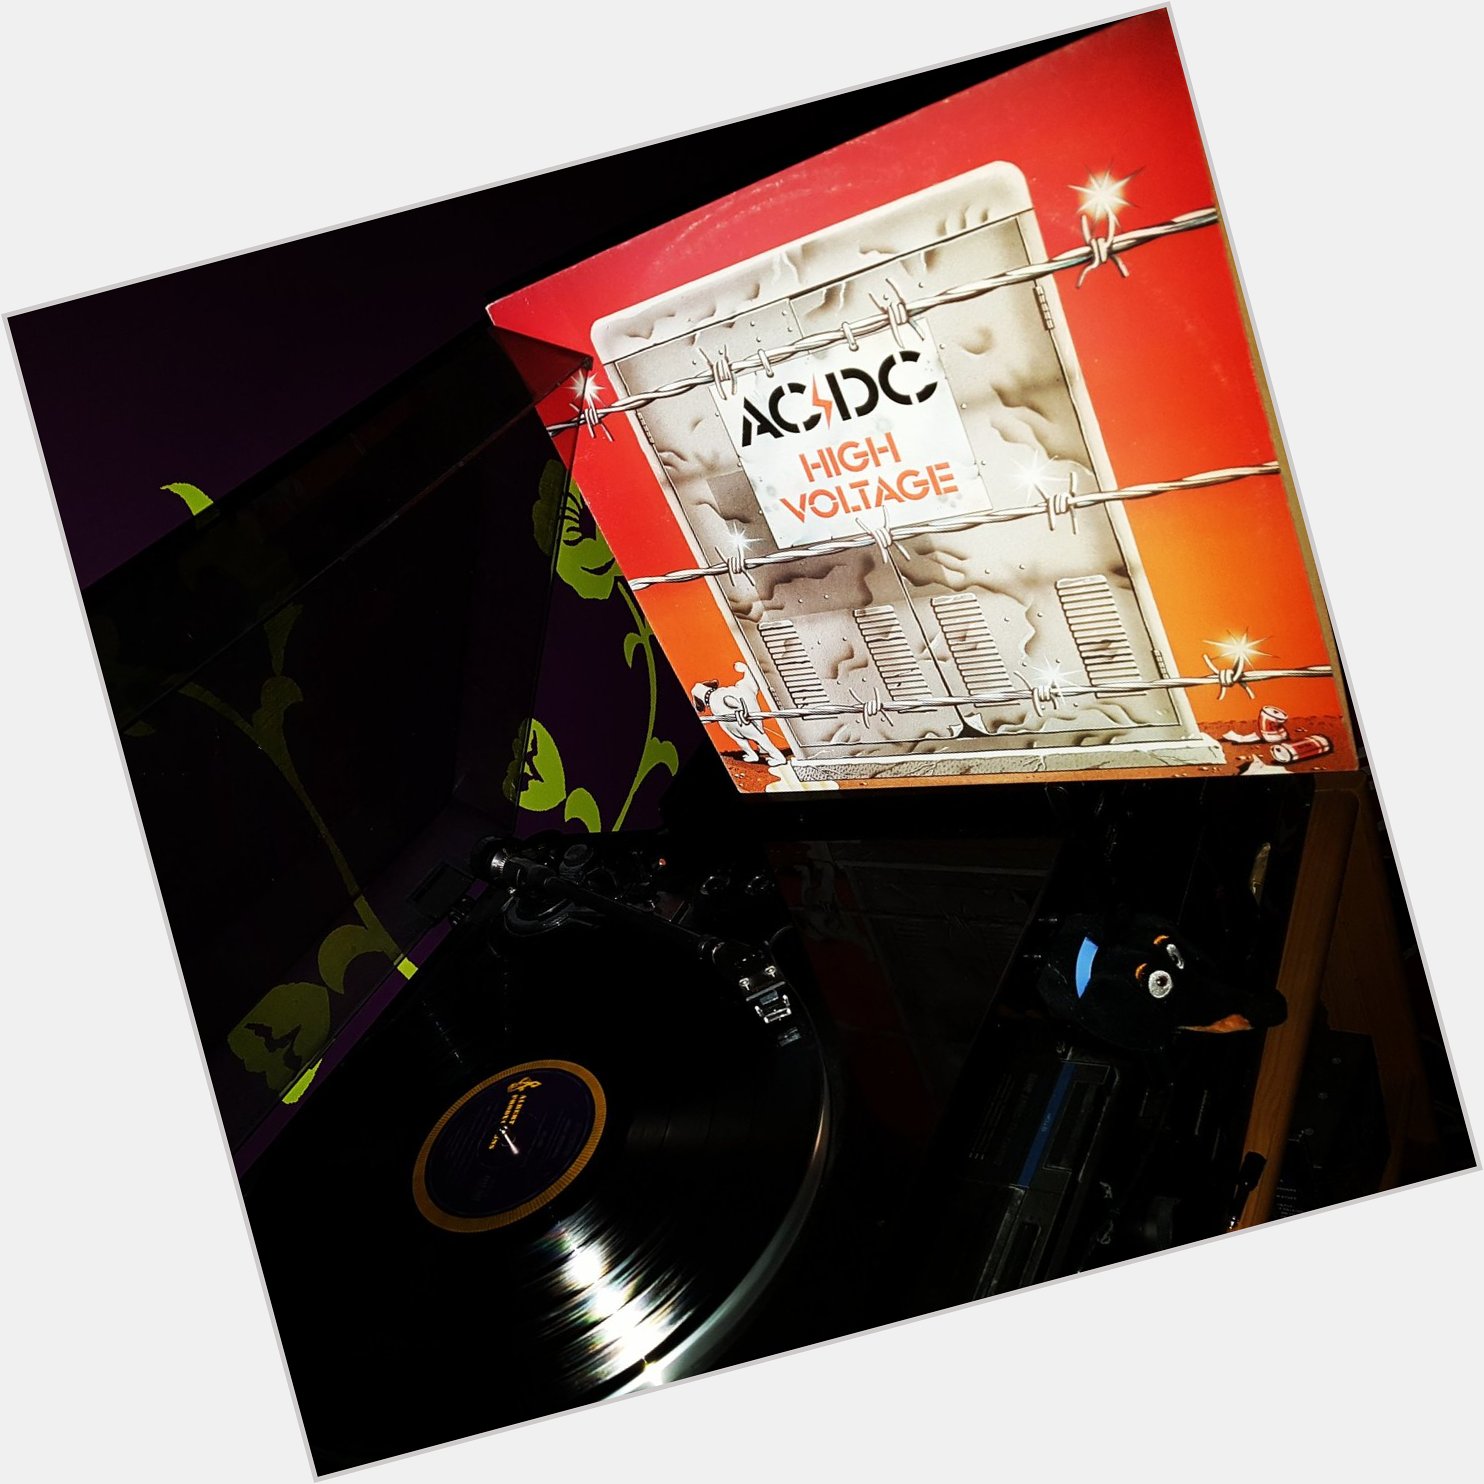 Happy Birthday Malcolm Young! RIP! AC/DC - High Voltage (Albert Productions/ EMI Australia/1975)  